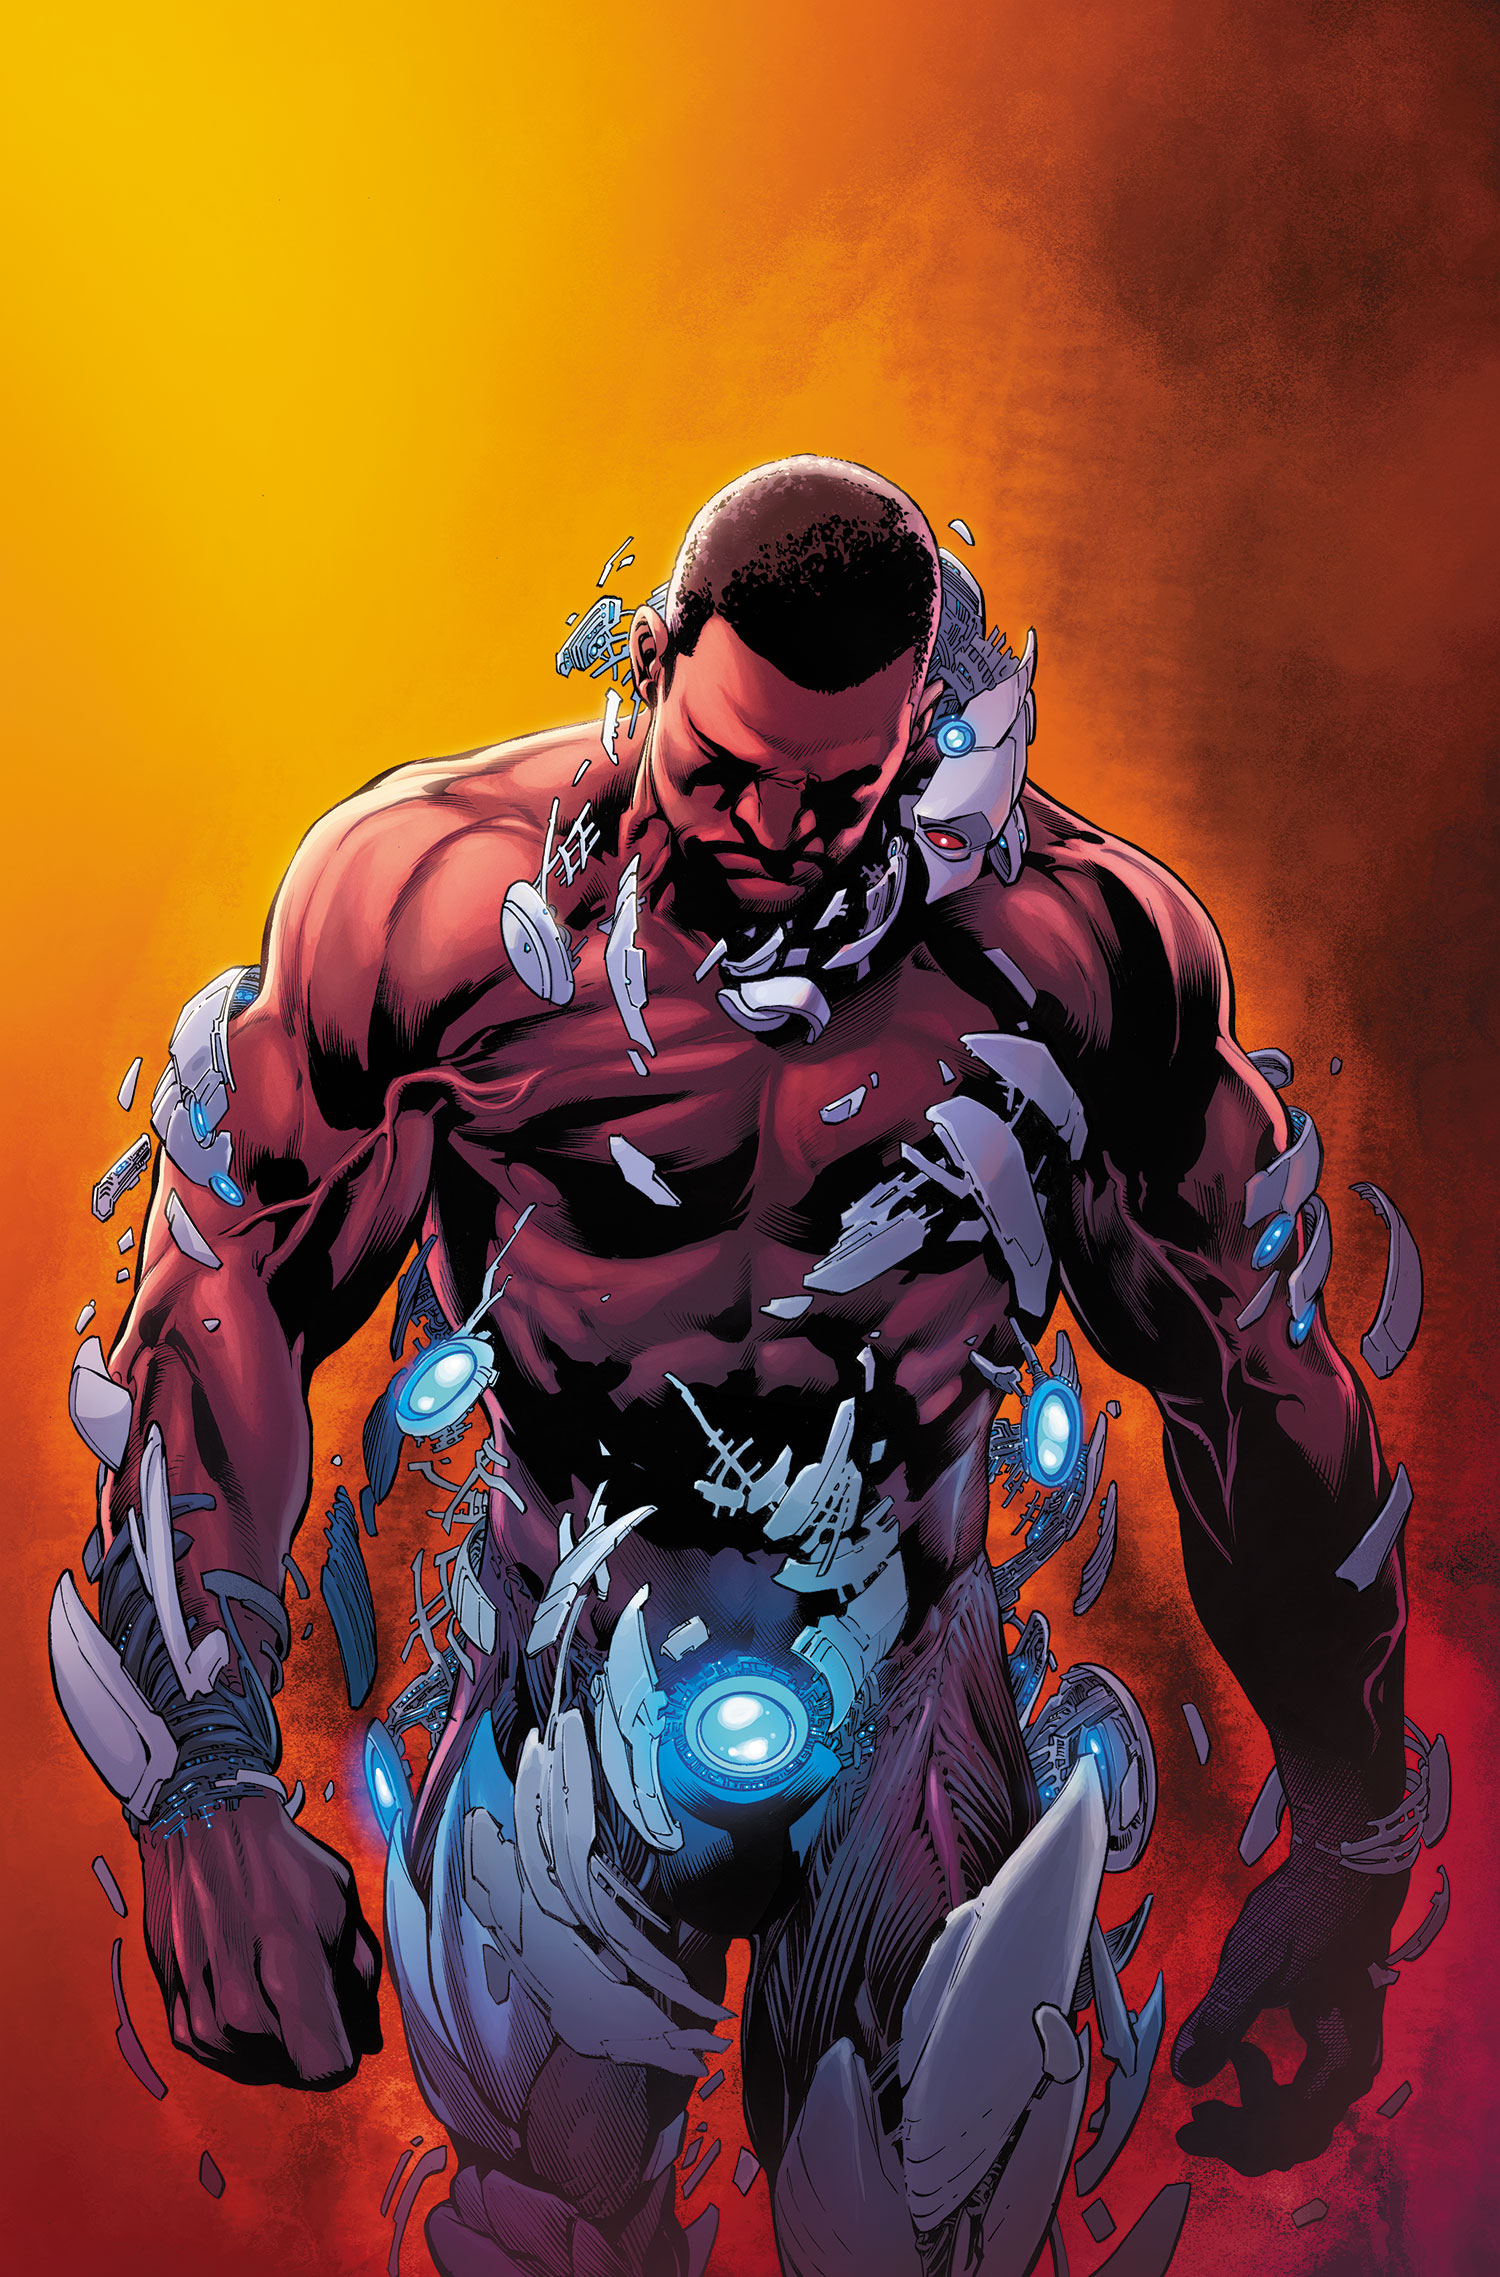 Spin Master DC Cyborg 6 Inch Action Figure, 1 Unit - Kroger